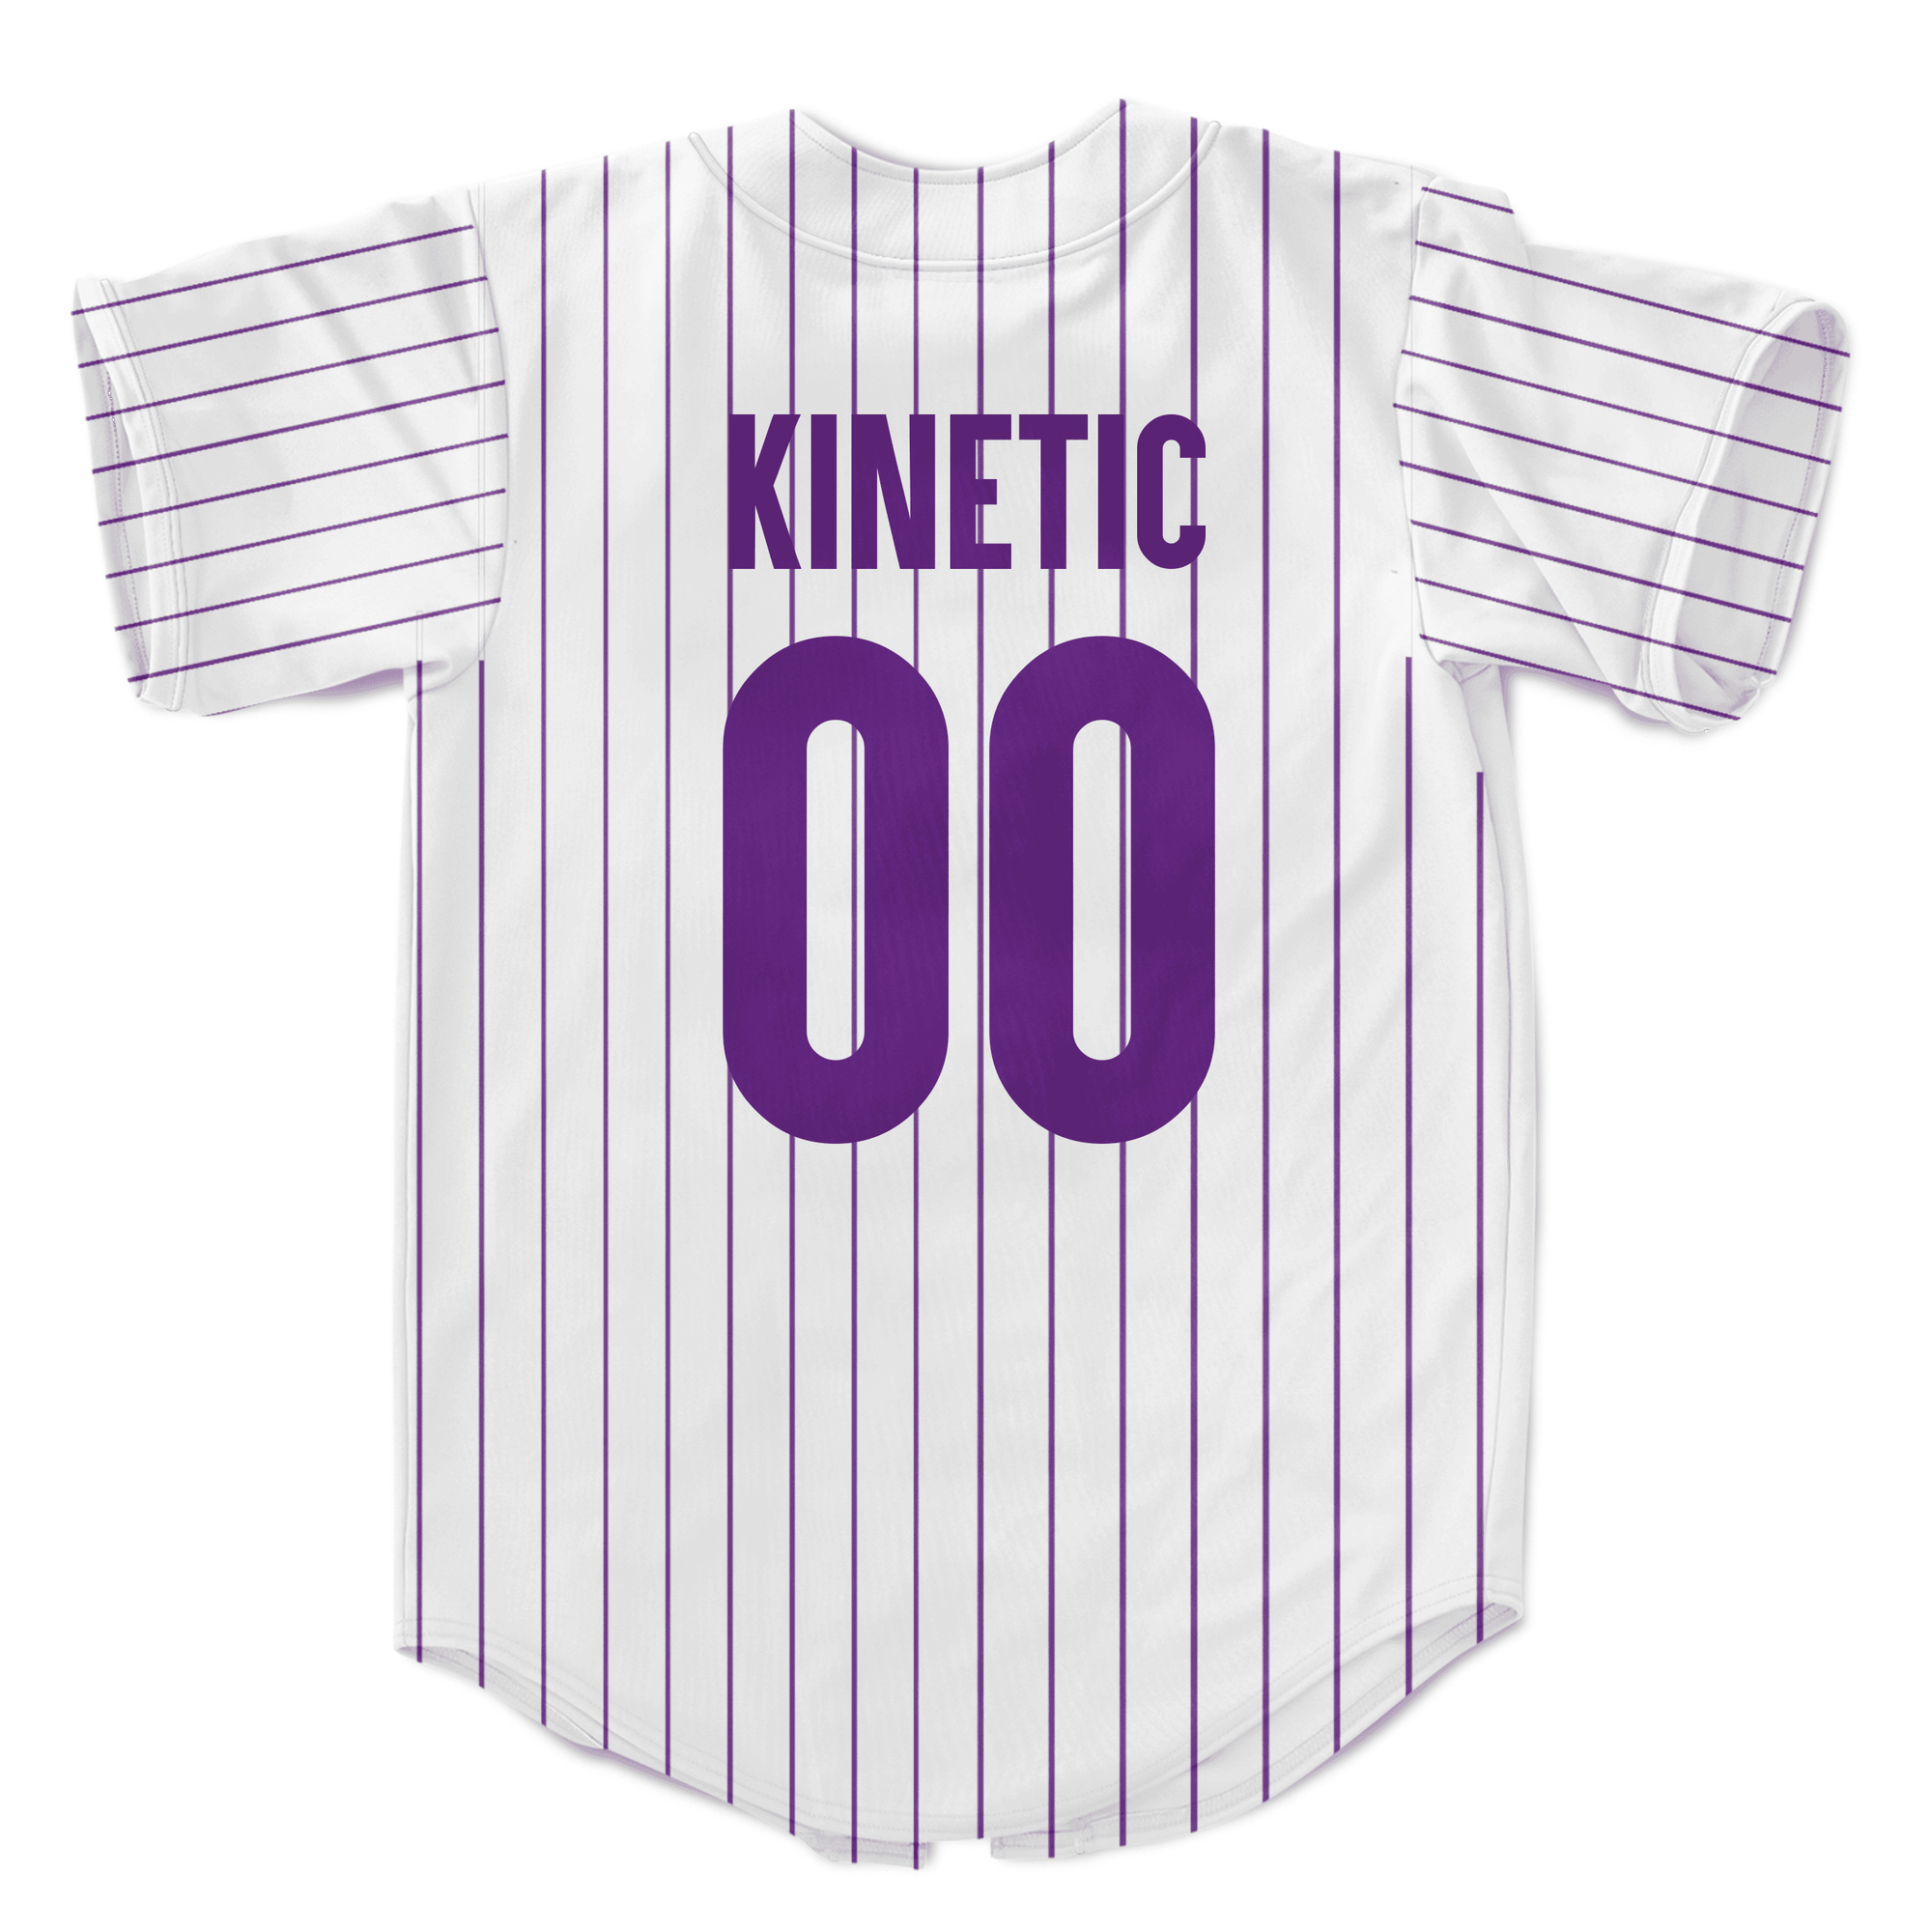 Sigma Phi Epsilon - Purple Pinstipe - Baseball Jersey